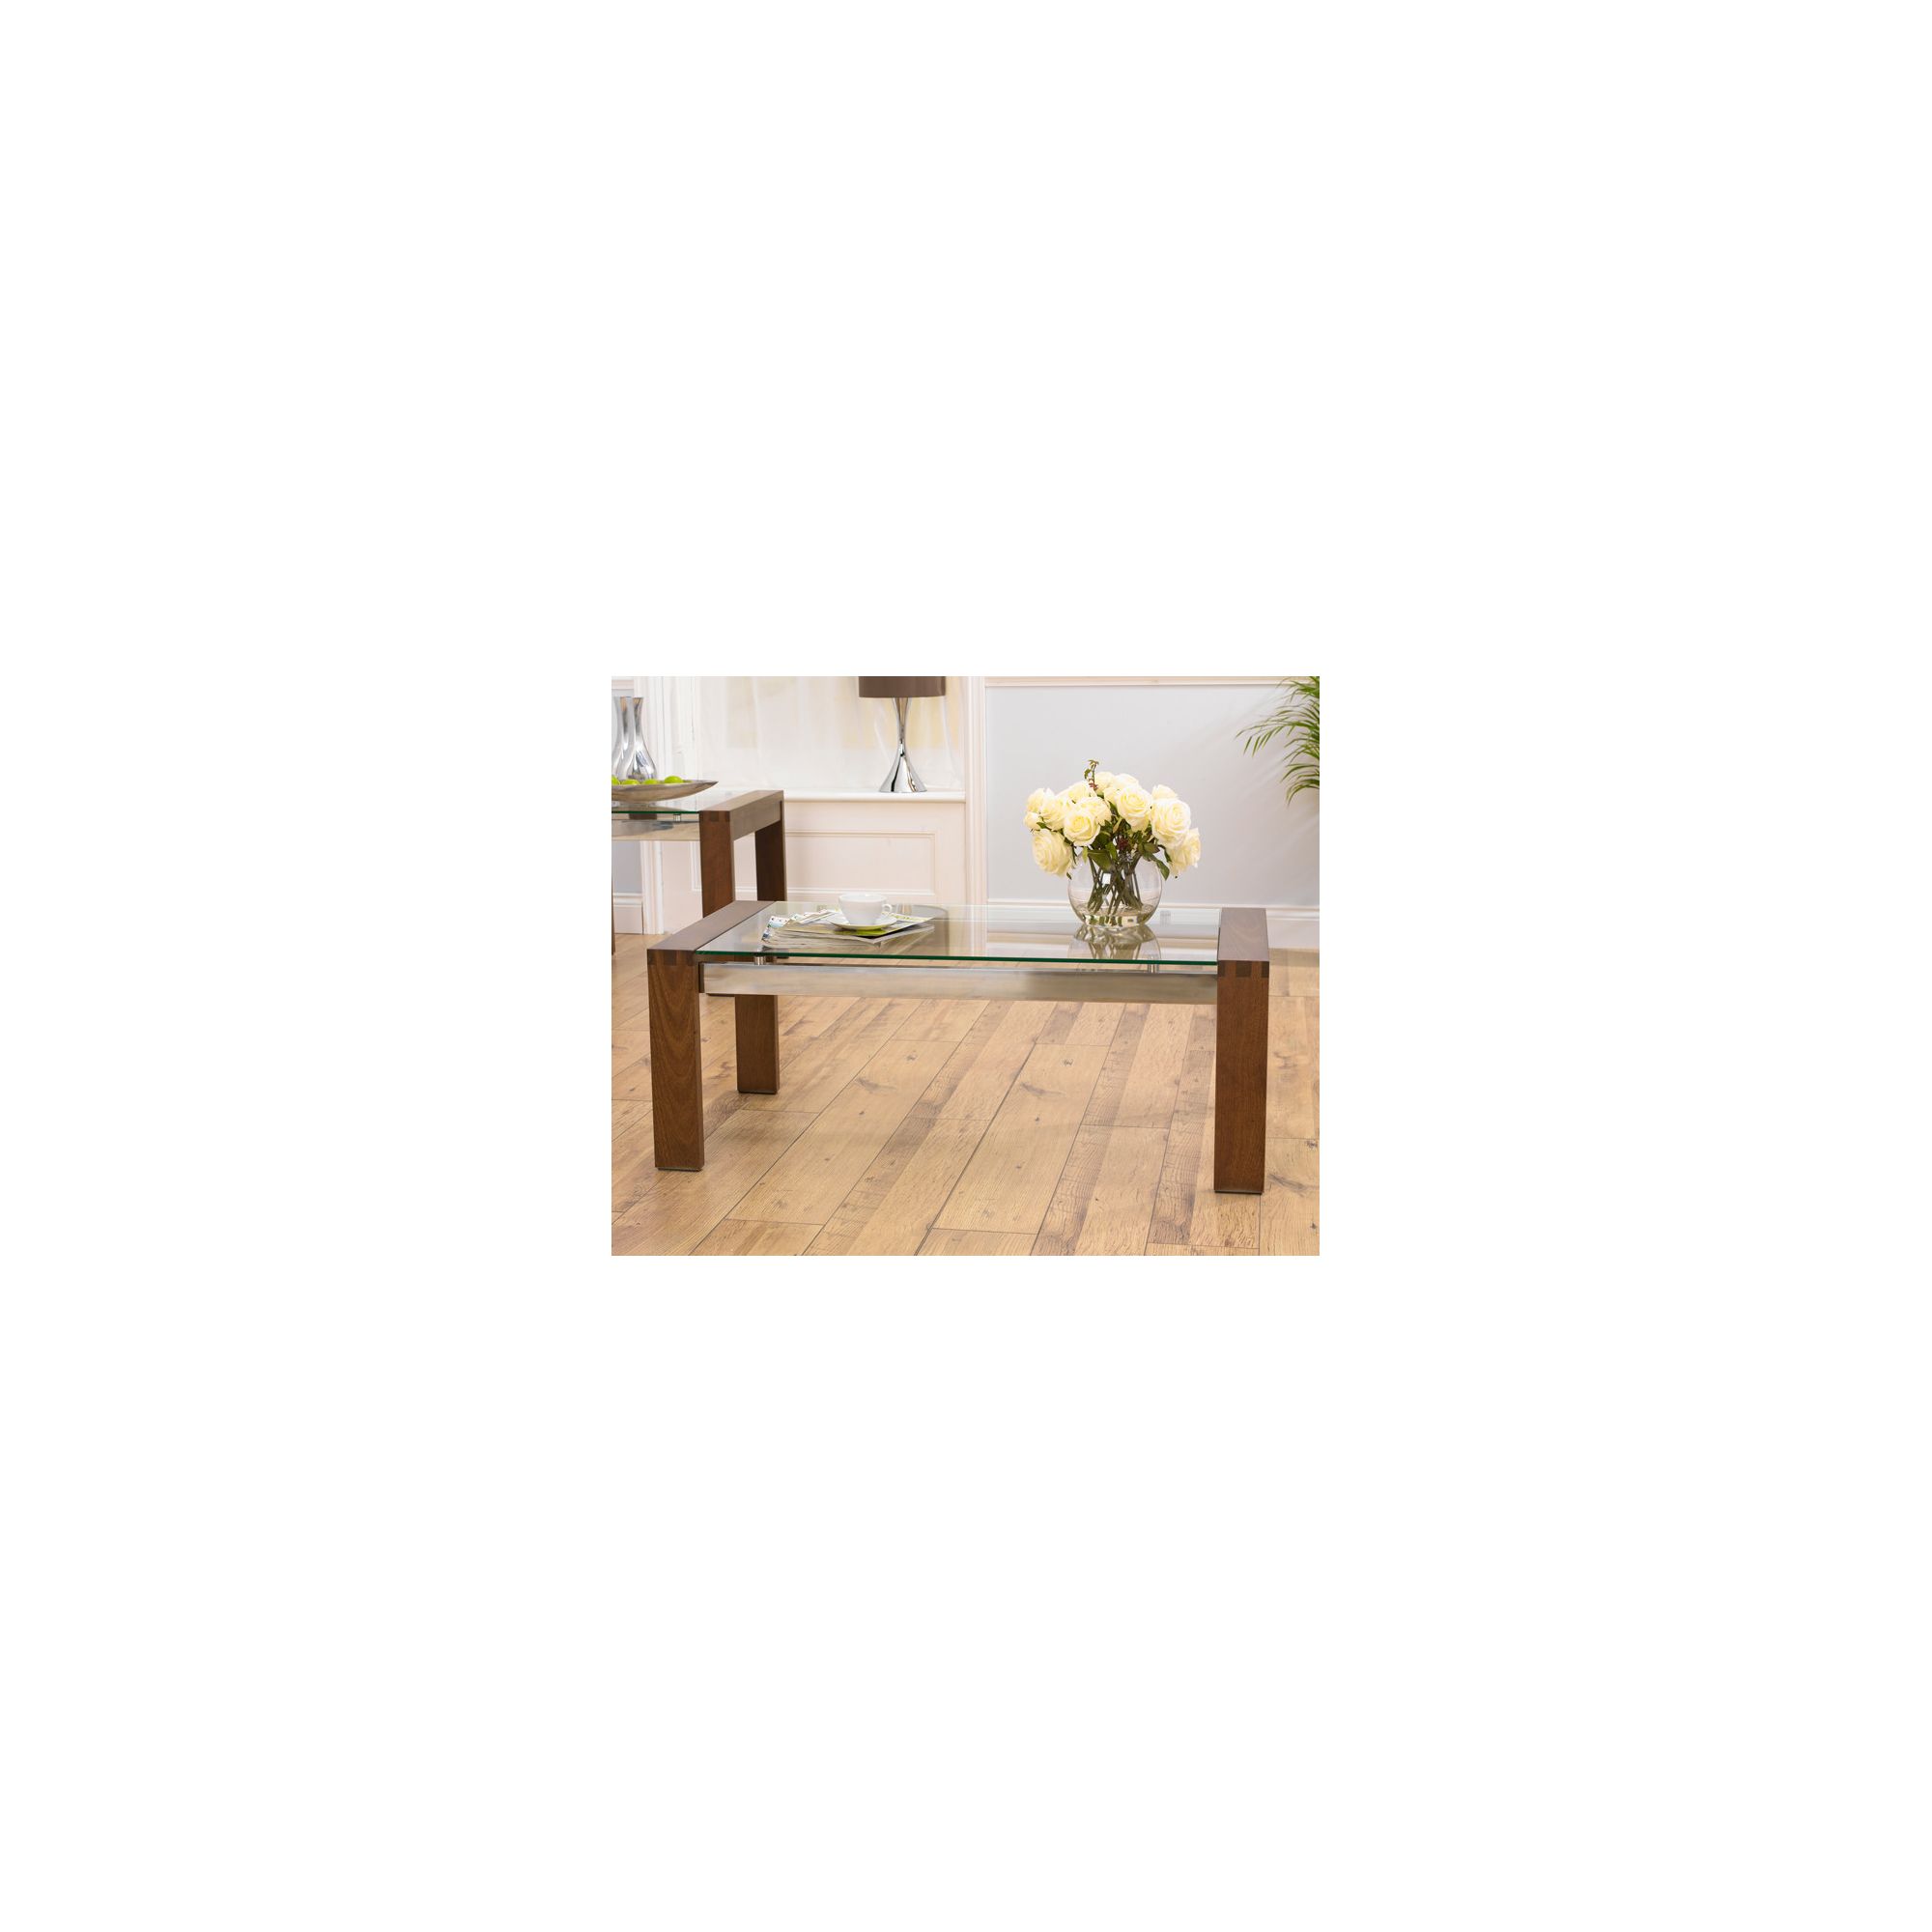 Mark Harris Furniture Roma Coffee Table in Solid Walnut at Tesco Direct